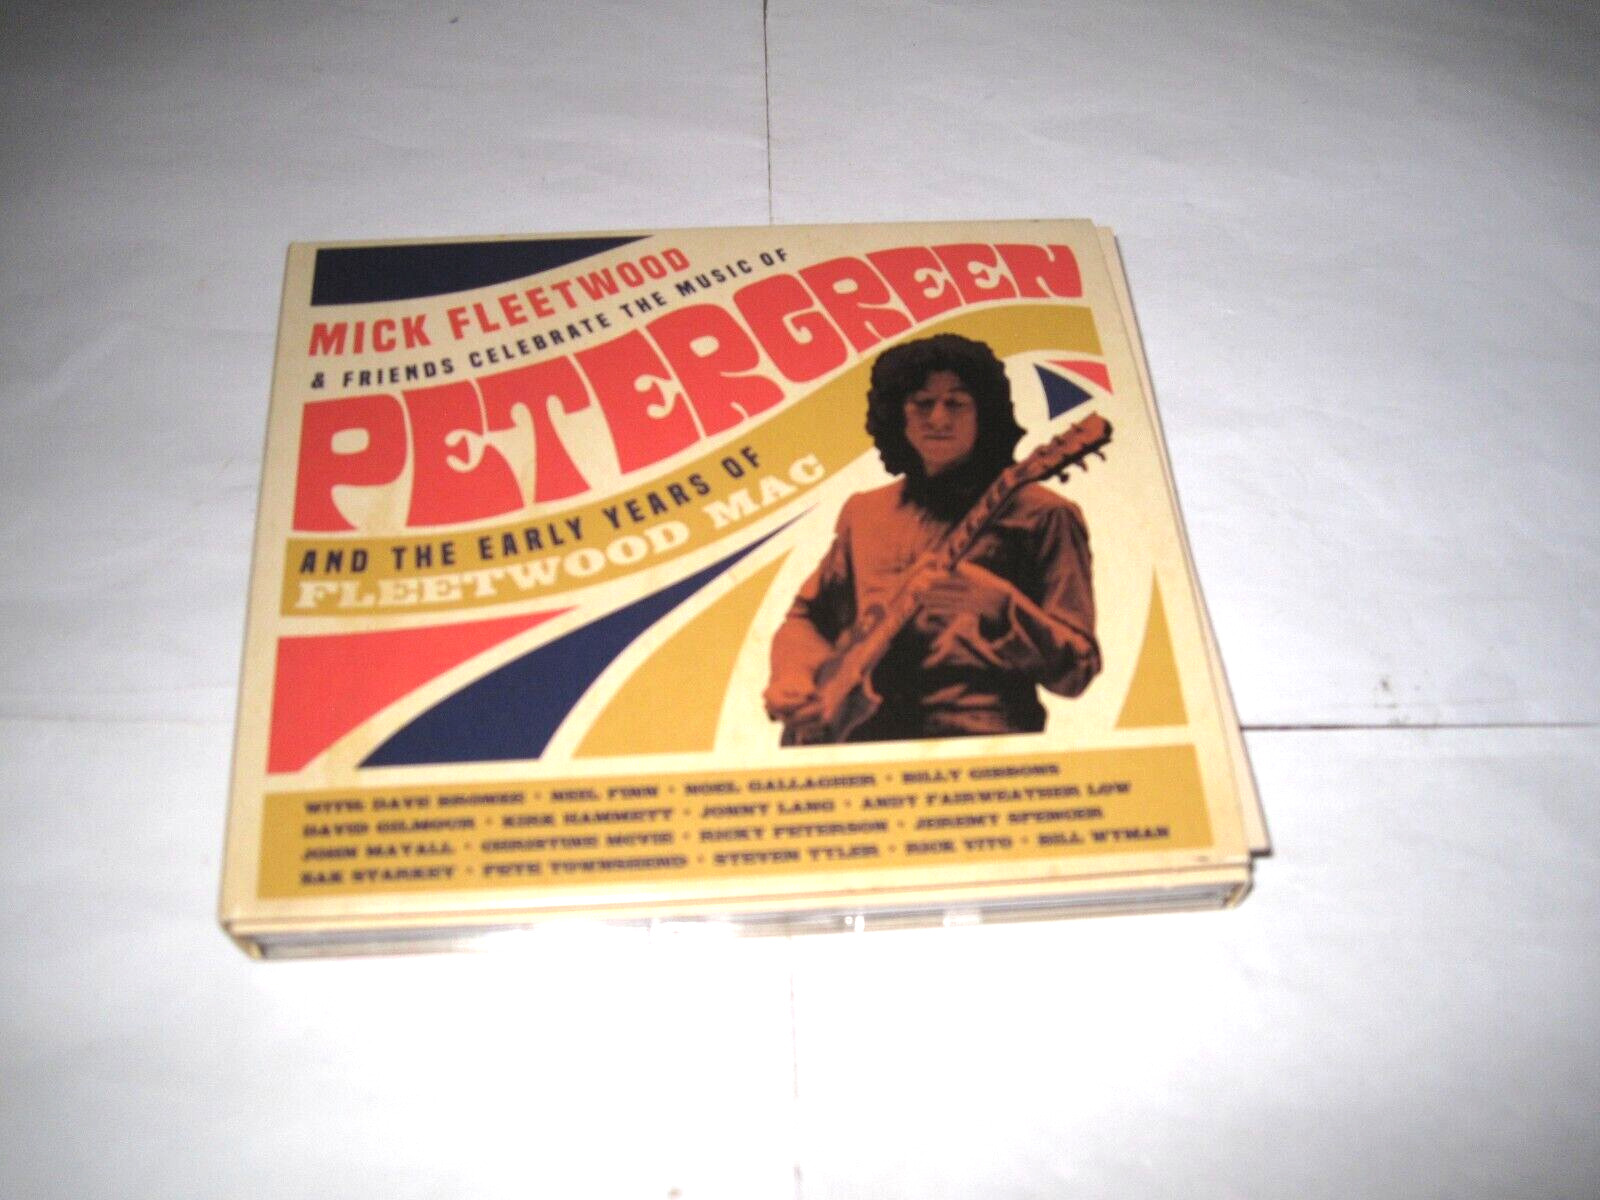 MICK FLEETWOOD & FRIENDS CELEBRATE MUSIC OF PETER GREEN